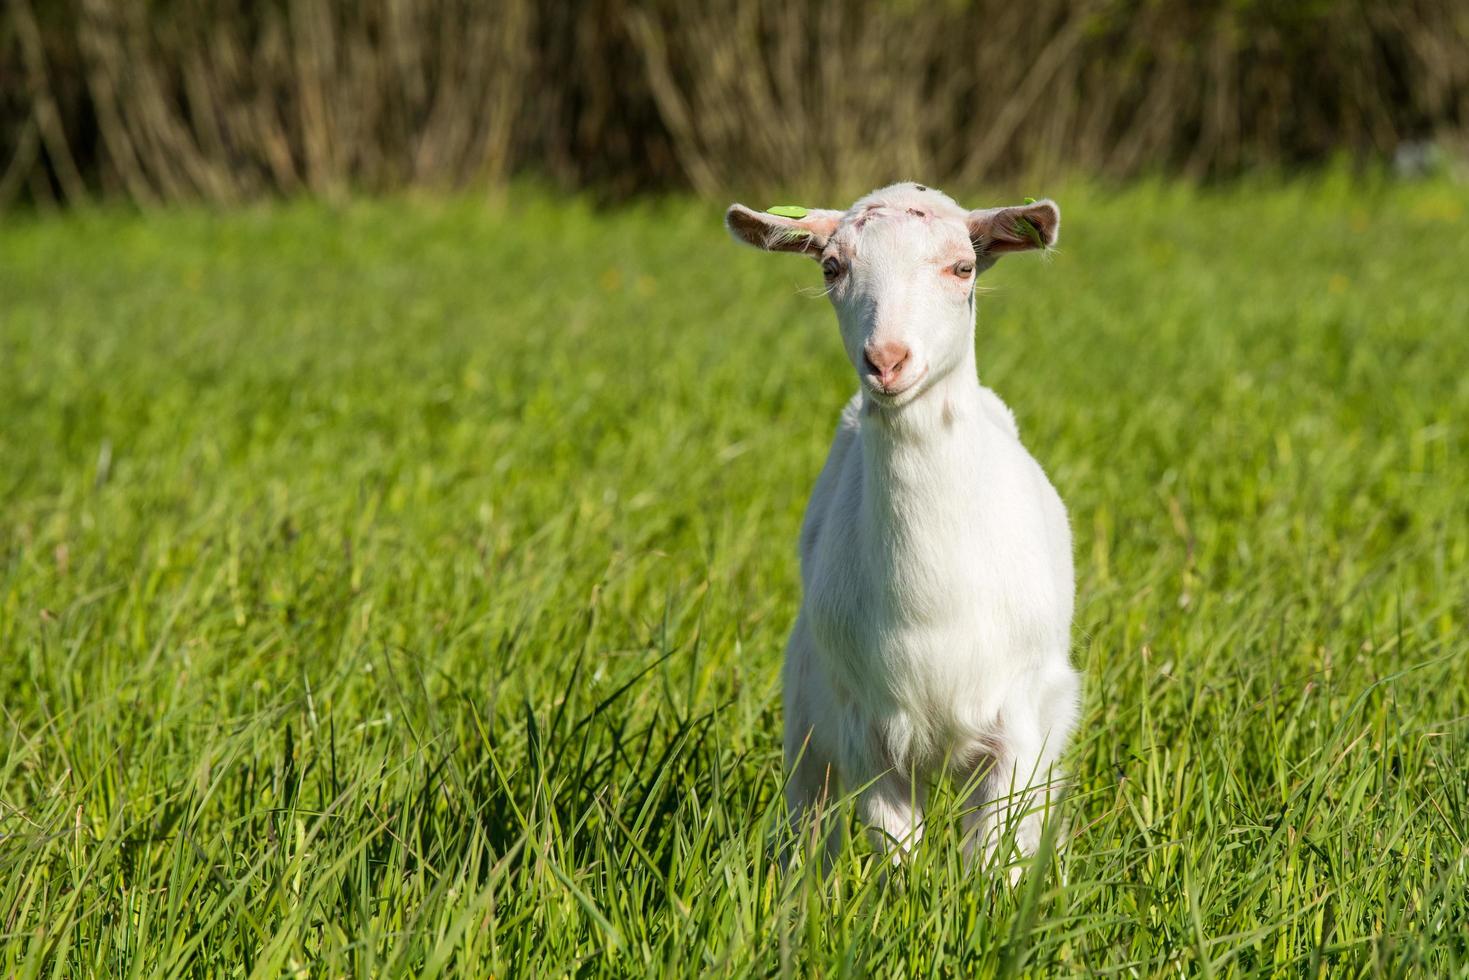 jeune chèvre blanche dans l'herbe verte photo